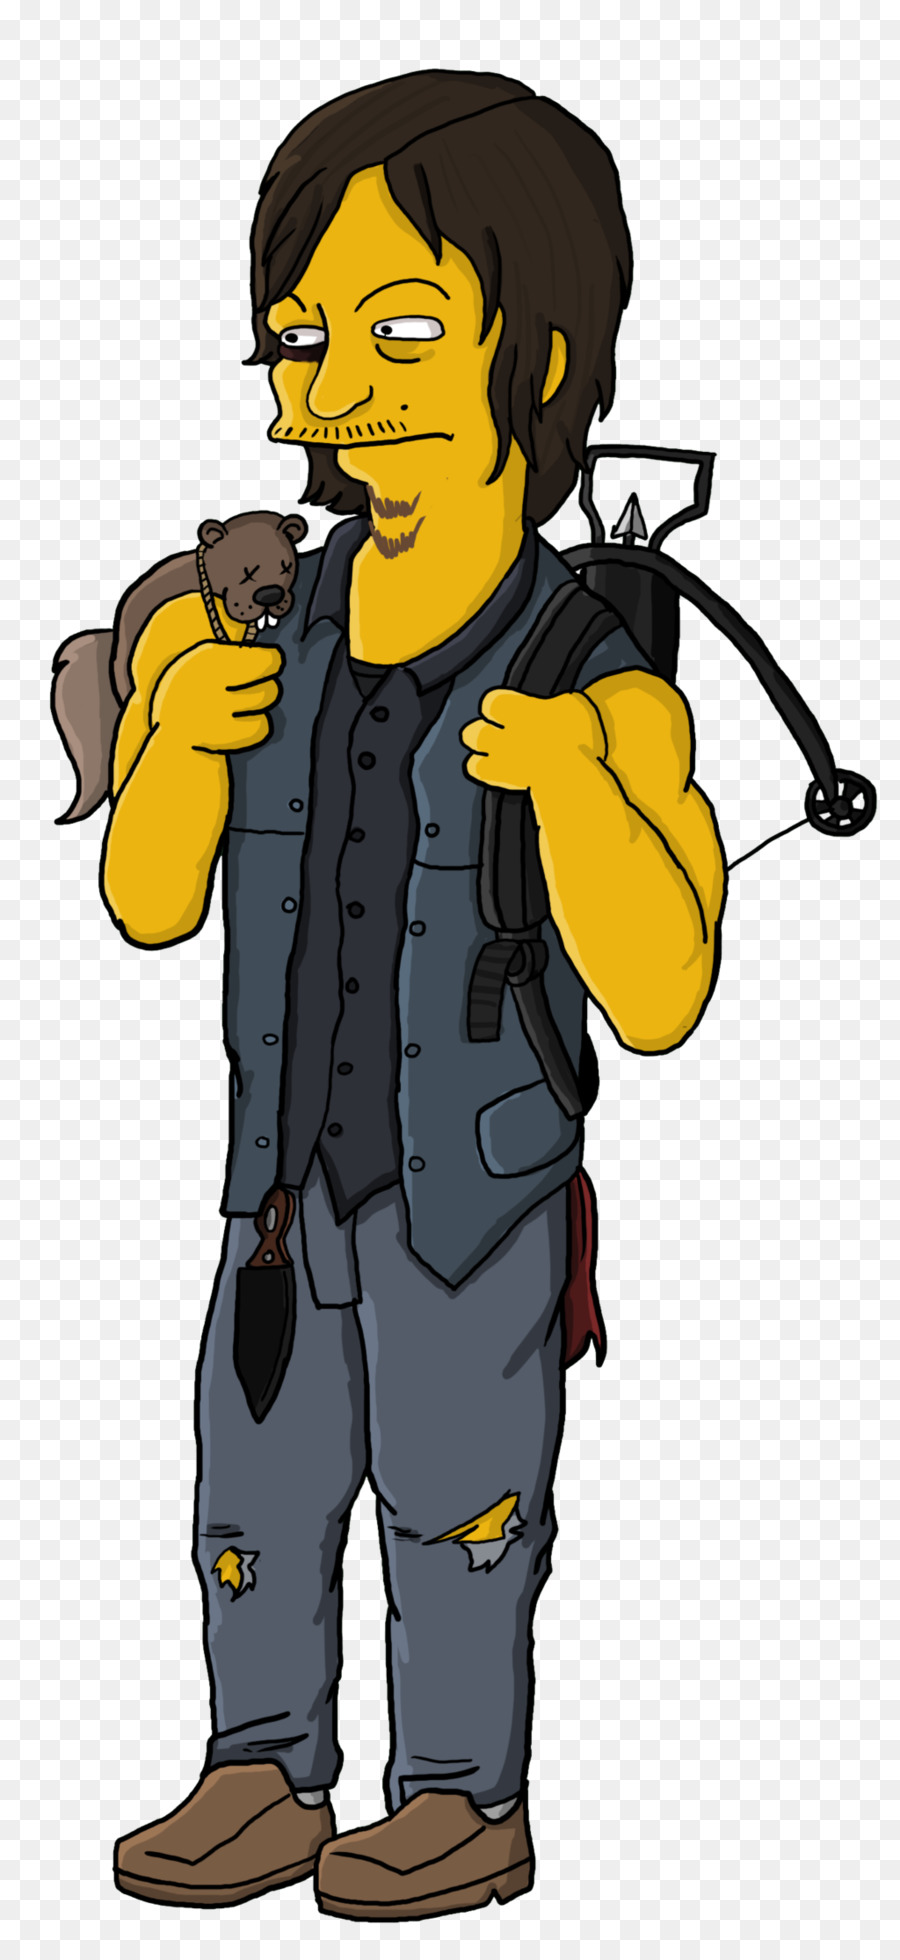 Daryl The Walking Dead Rick Andrew Lincoln Carl Grimes - Simpsons Phim png  tải về - Miễn phí trong suốt Nghệ Thuật png Tải về.